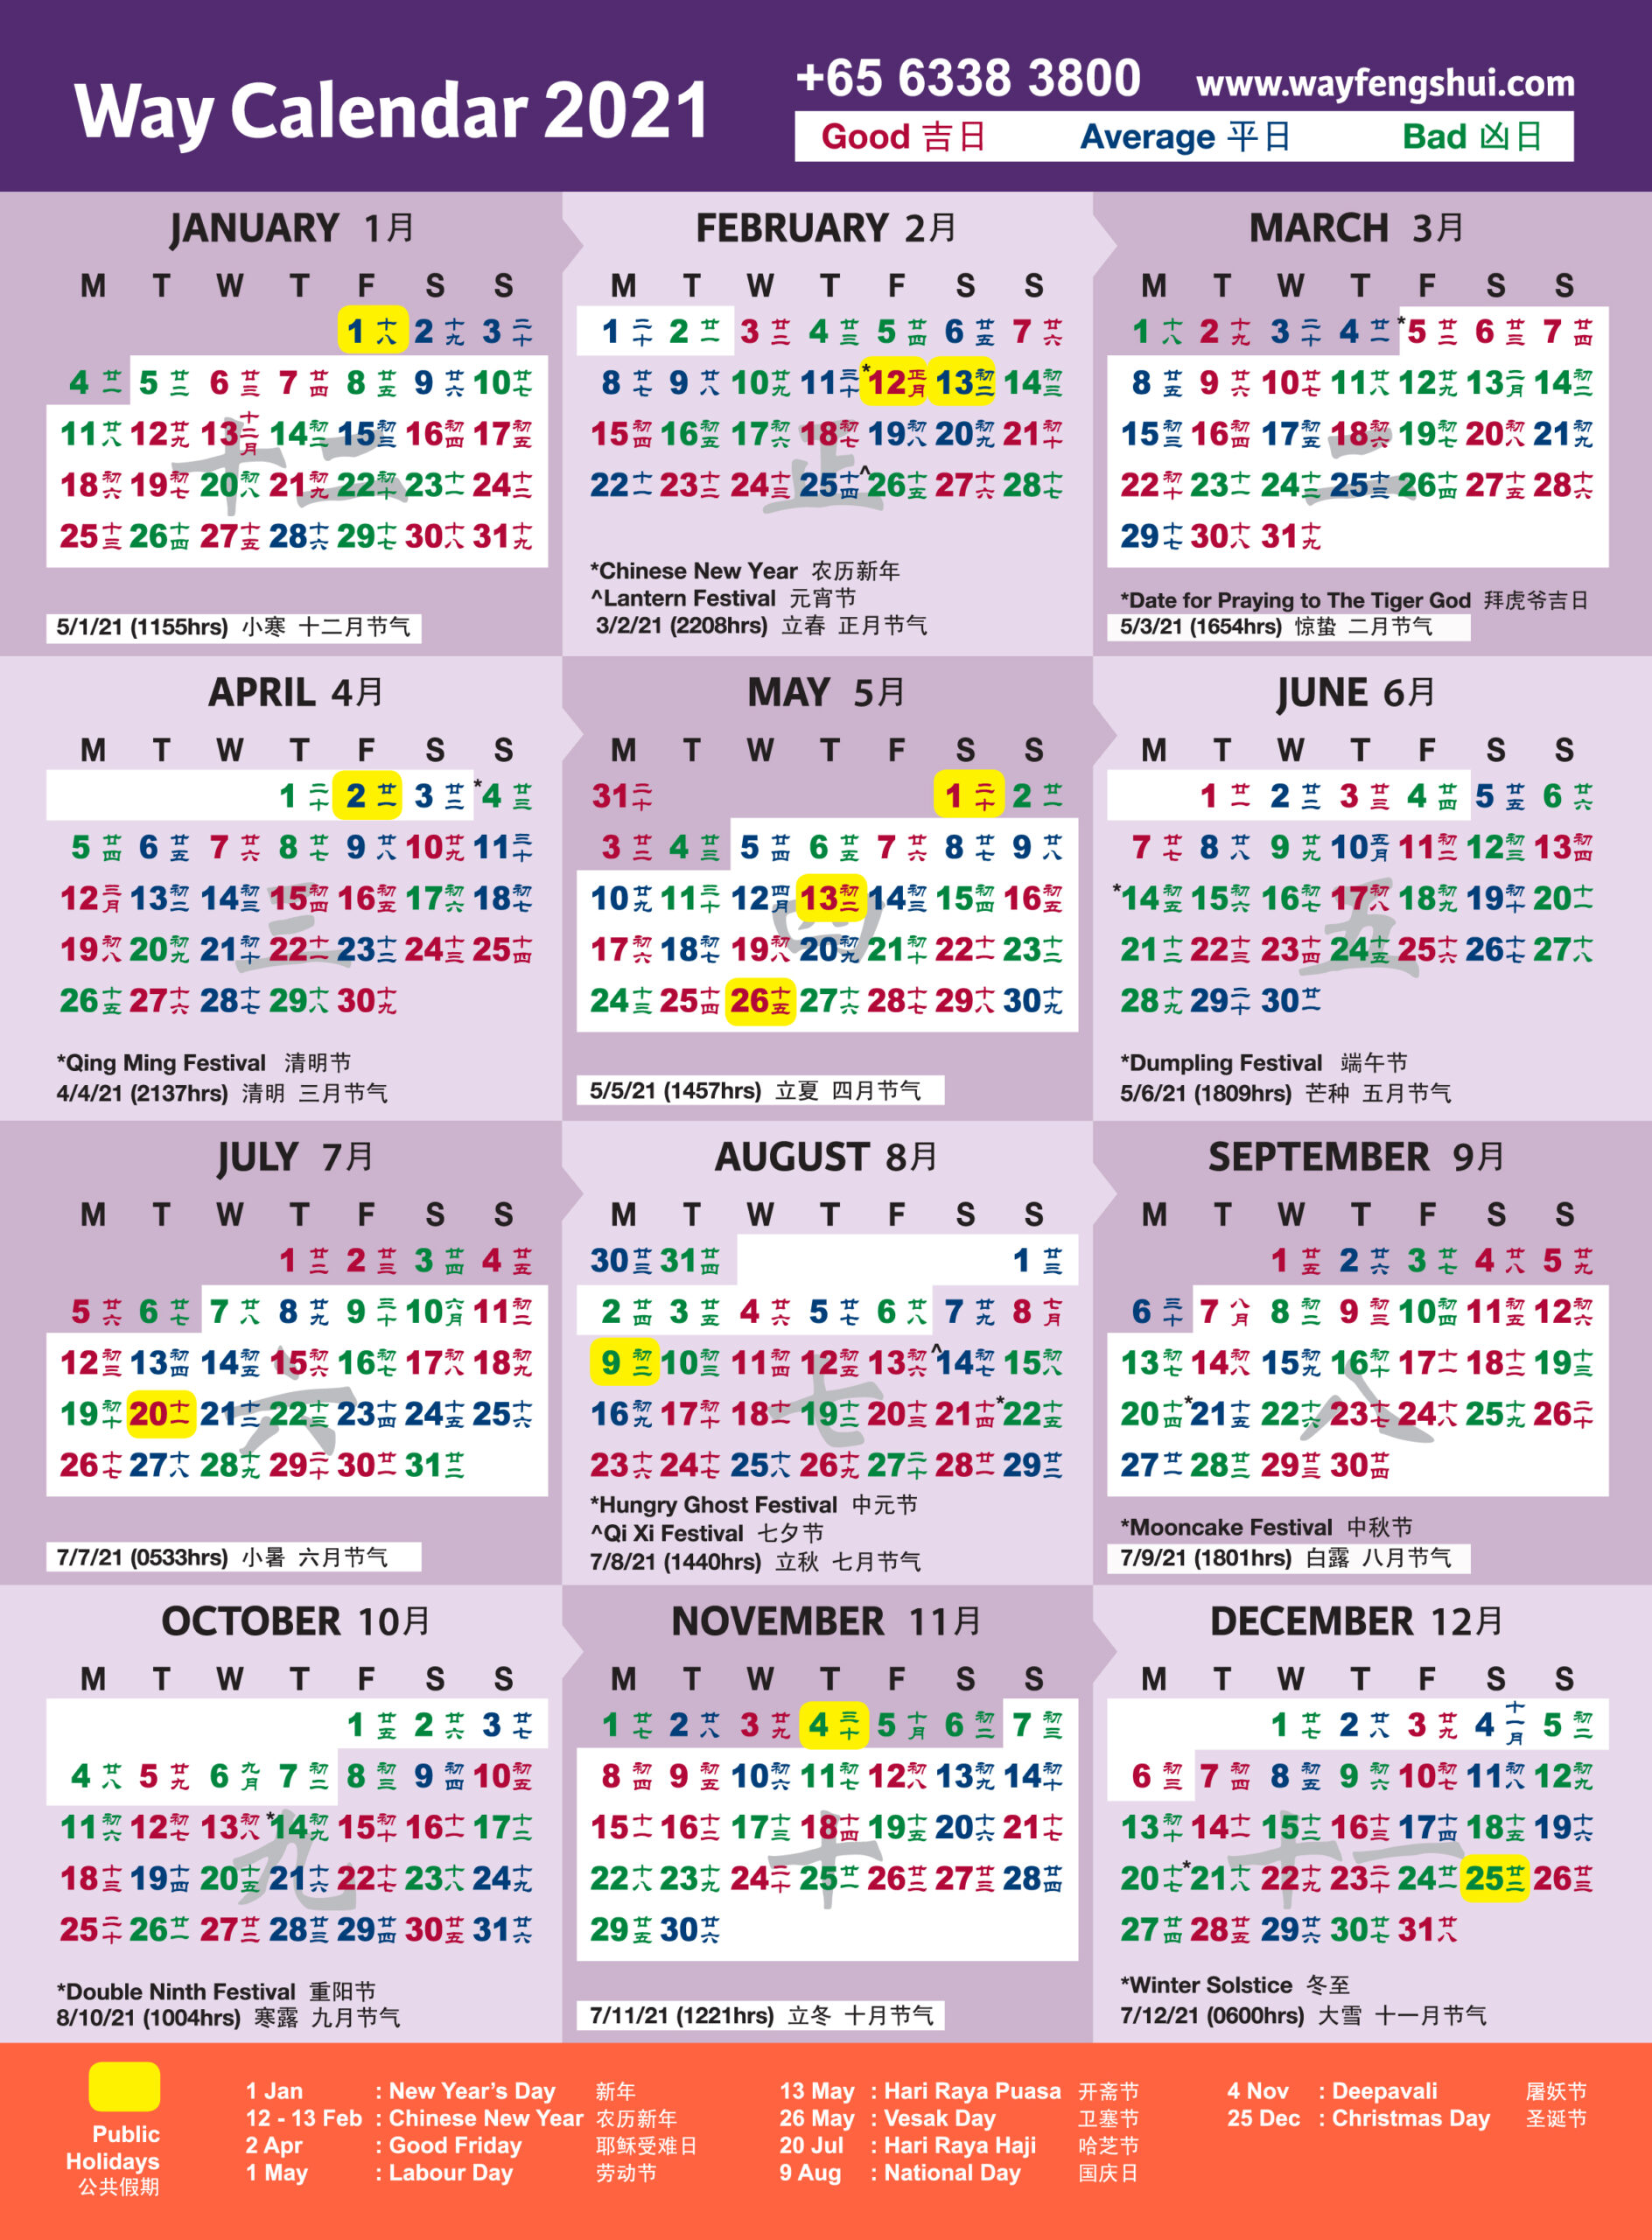 2021 Way Calendar - Feng Shui Master Singapore, Chinese